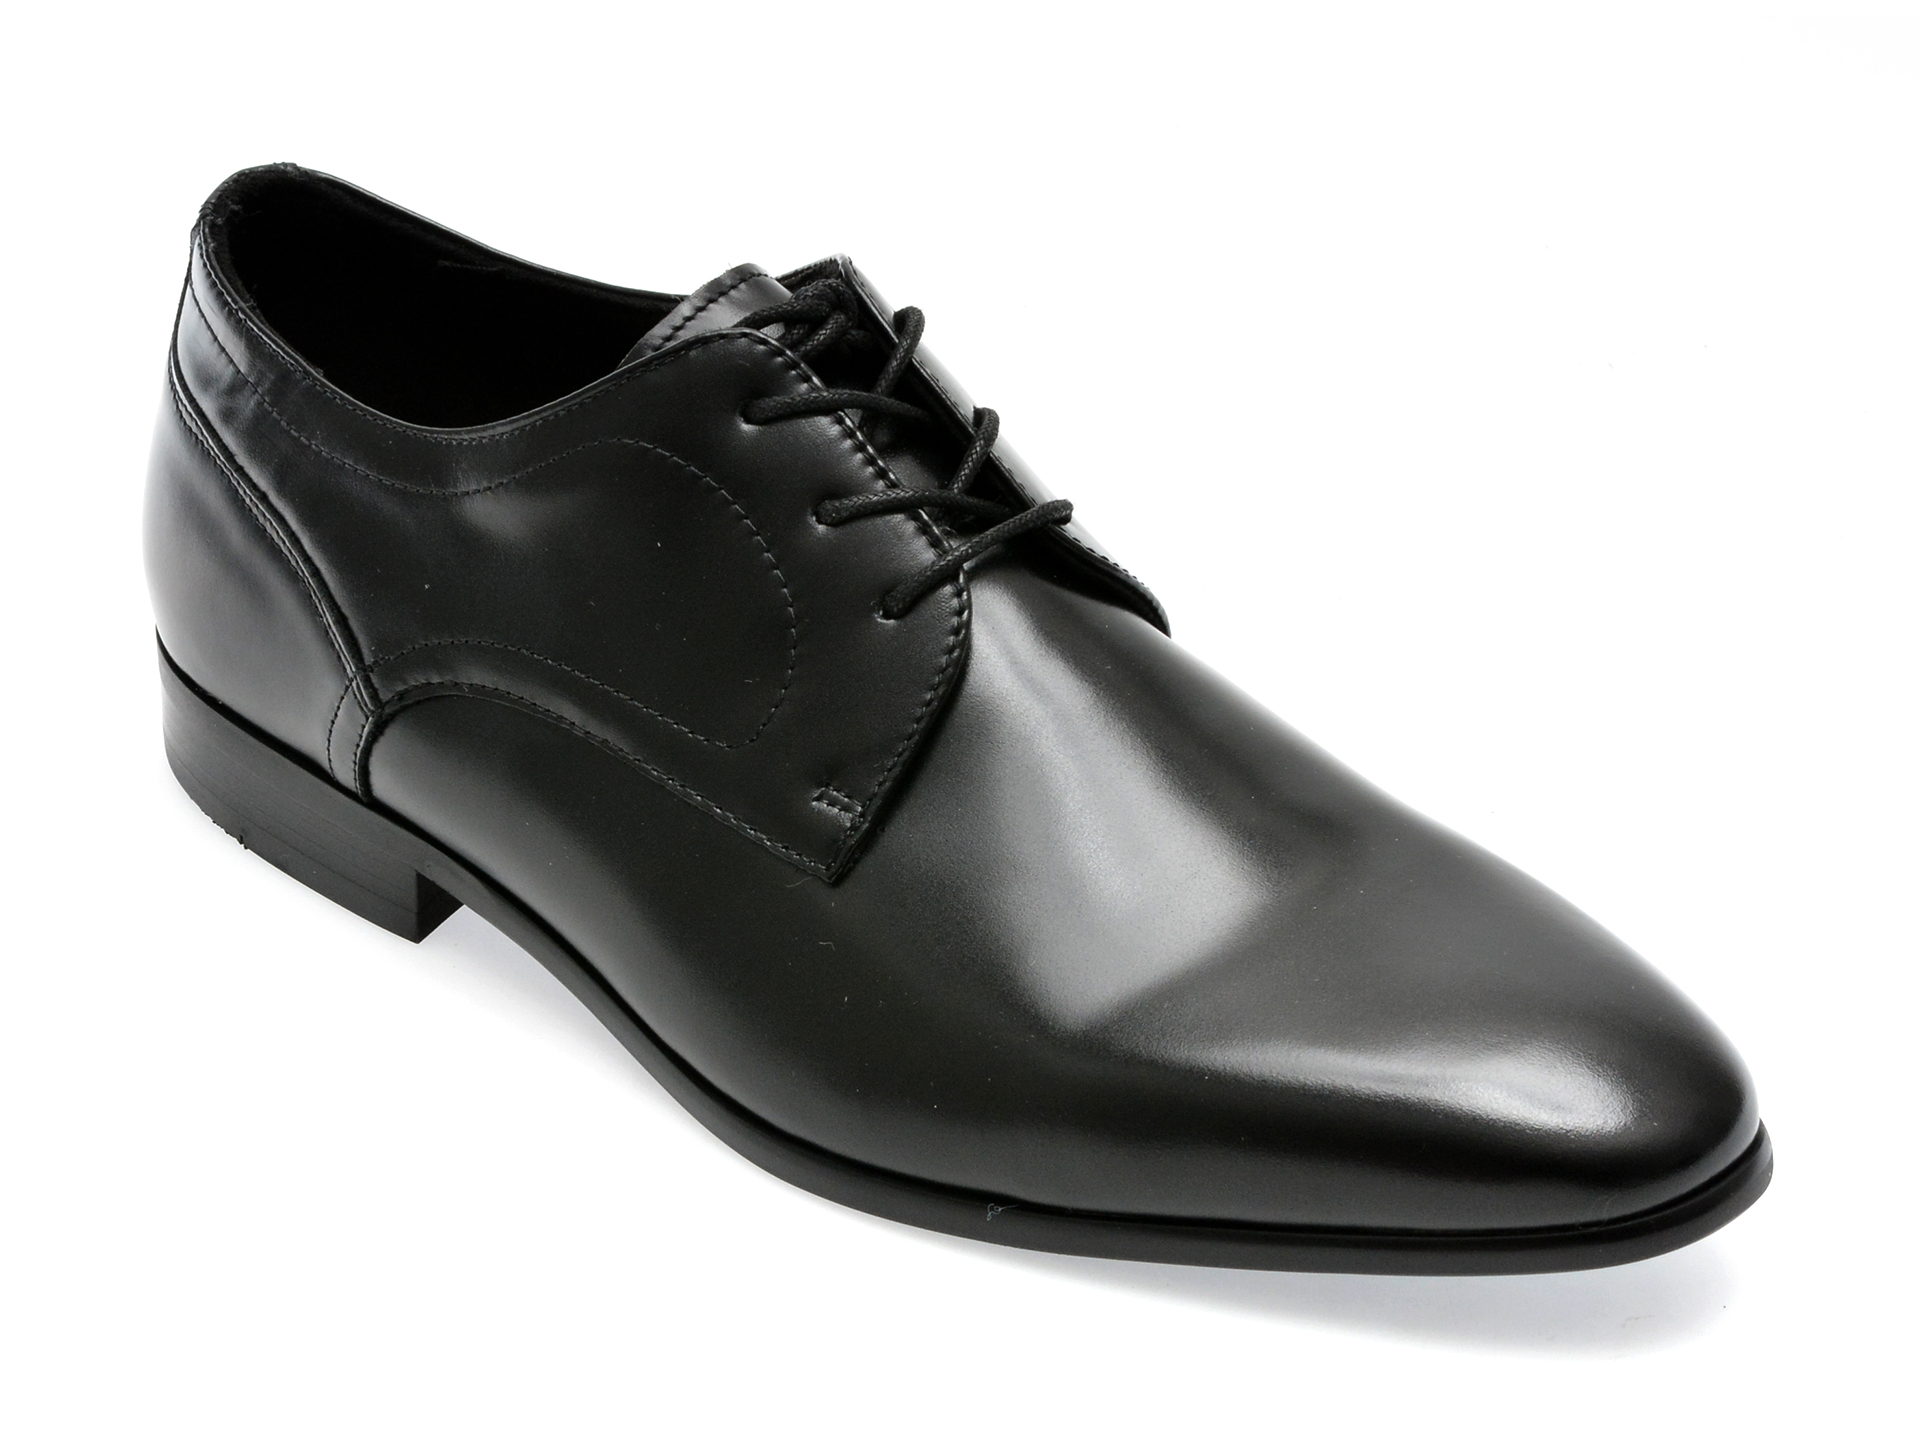 Pantofi ALDO negri, DELFORDFLEX009, din piele naturala